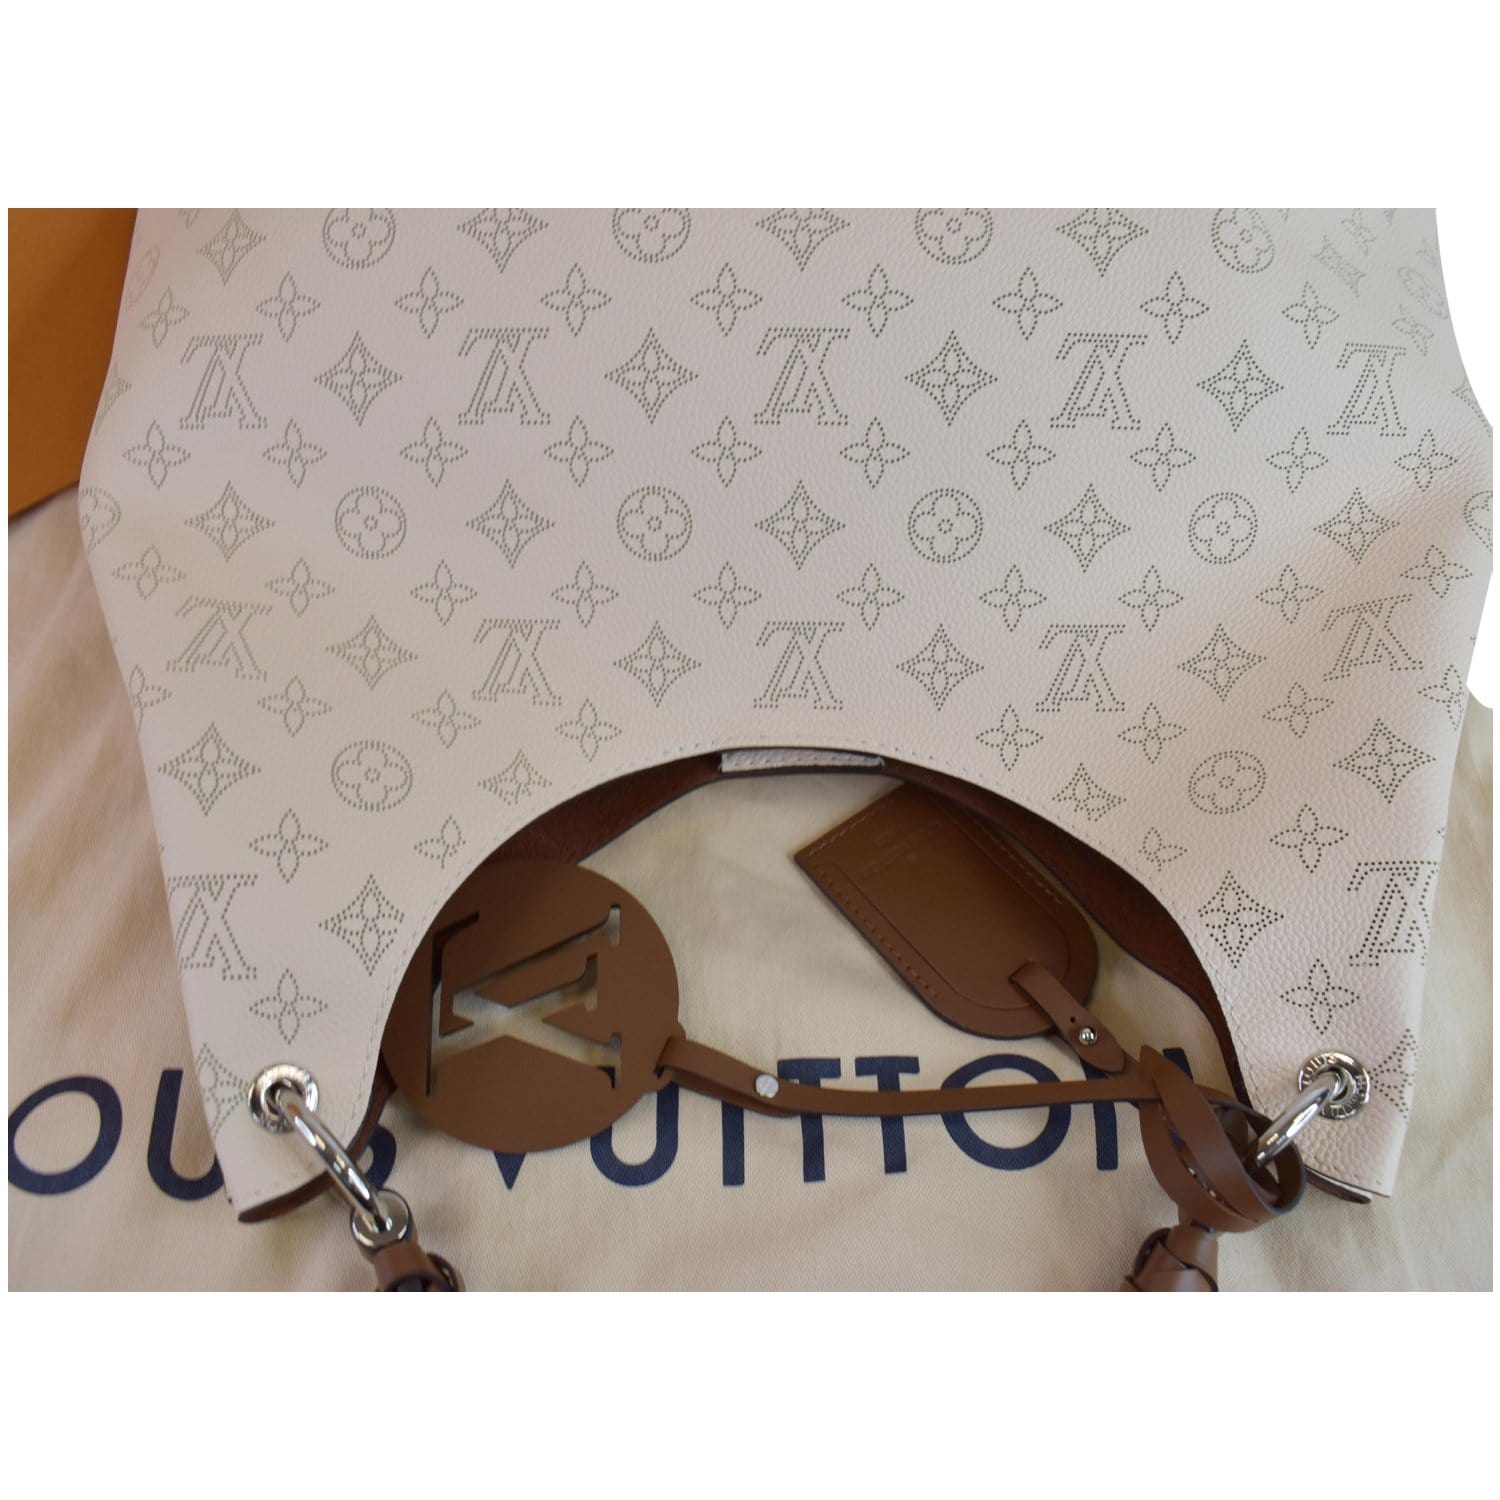 M57572 Louis Vuitton Monogram Mahina Carmel Hobo Bag